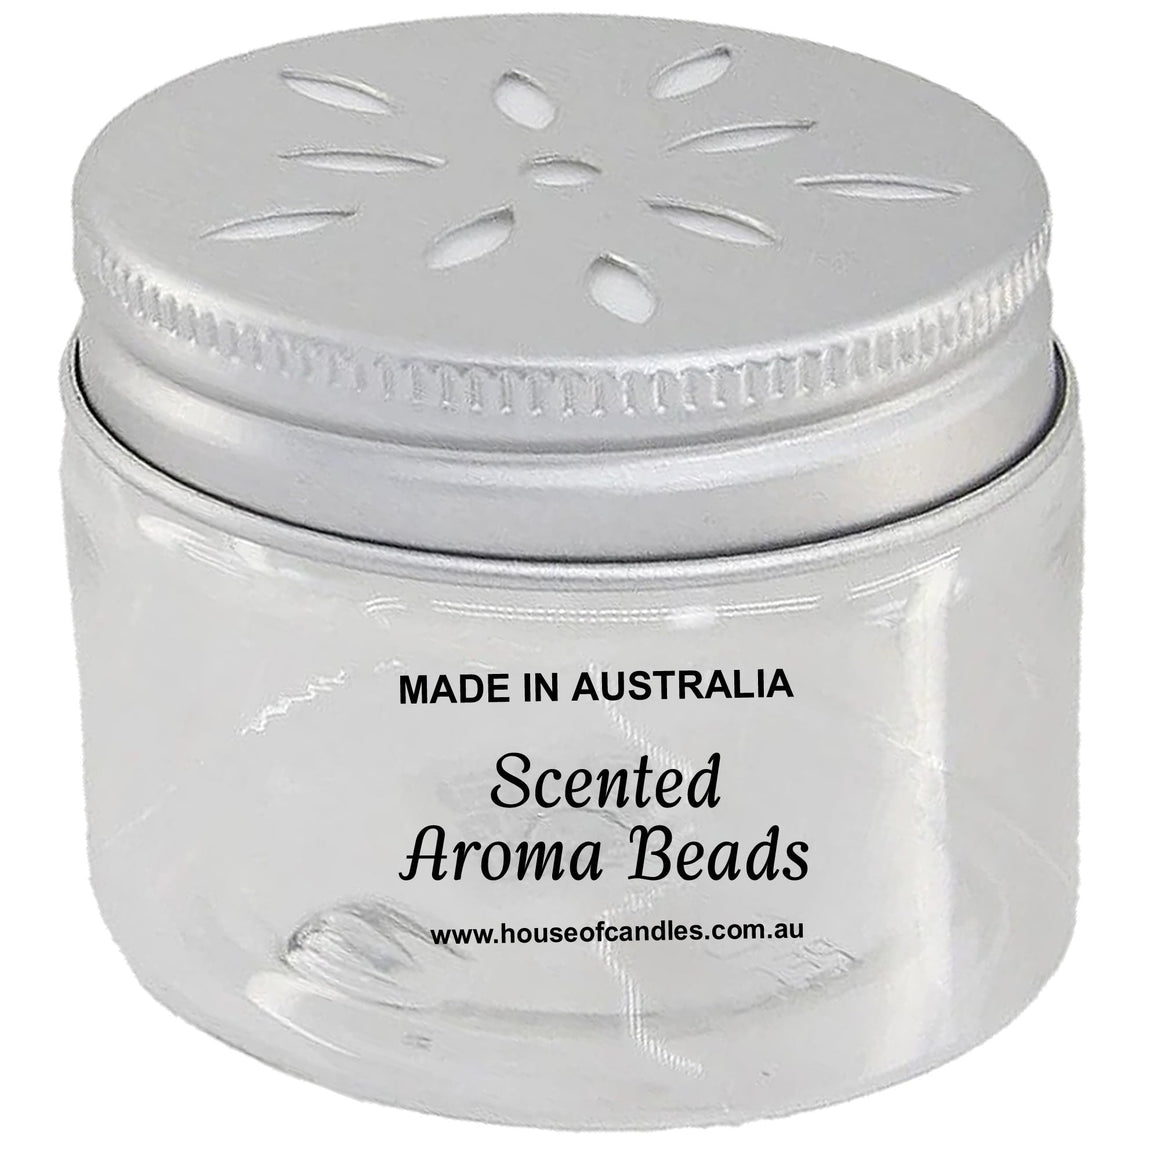 Cinnamon buns Scented Aroma Beads Room/Car Air Freshener